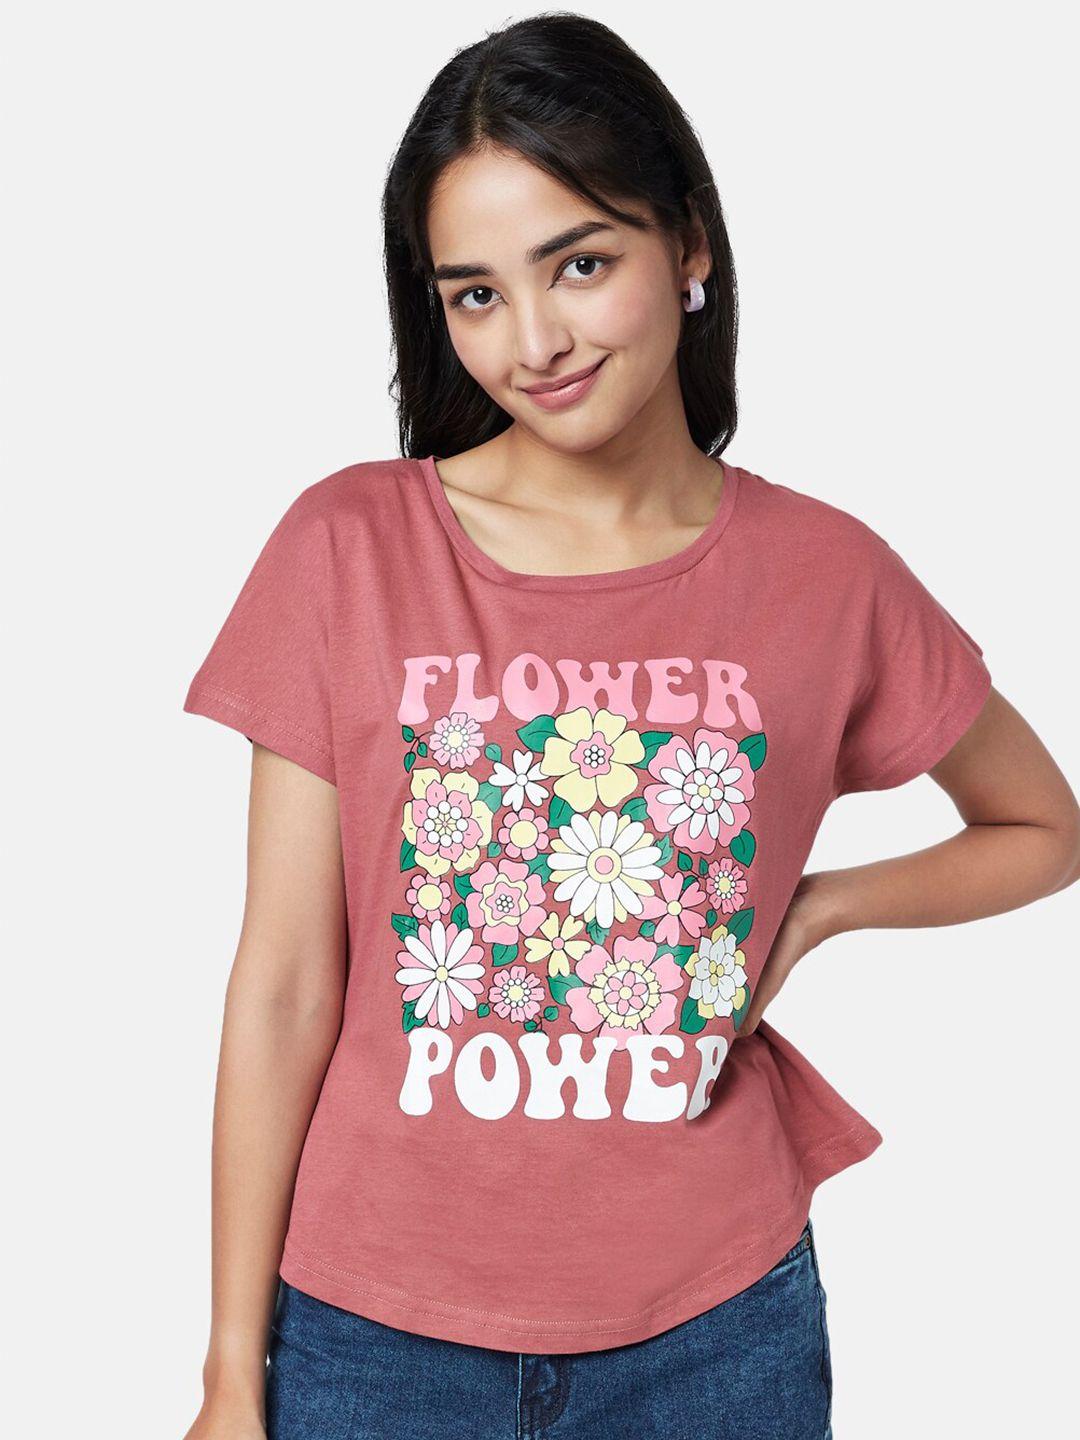 yu-by-pantaloons-women-floral-printed-cotton-t-shirt